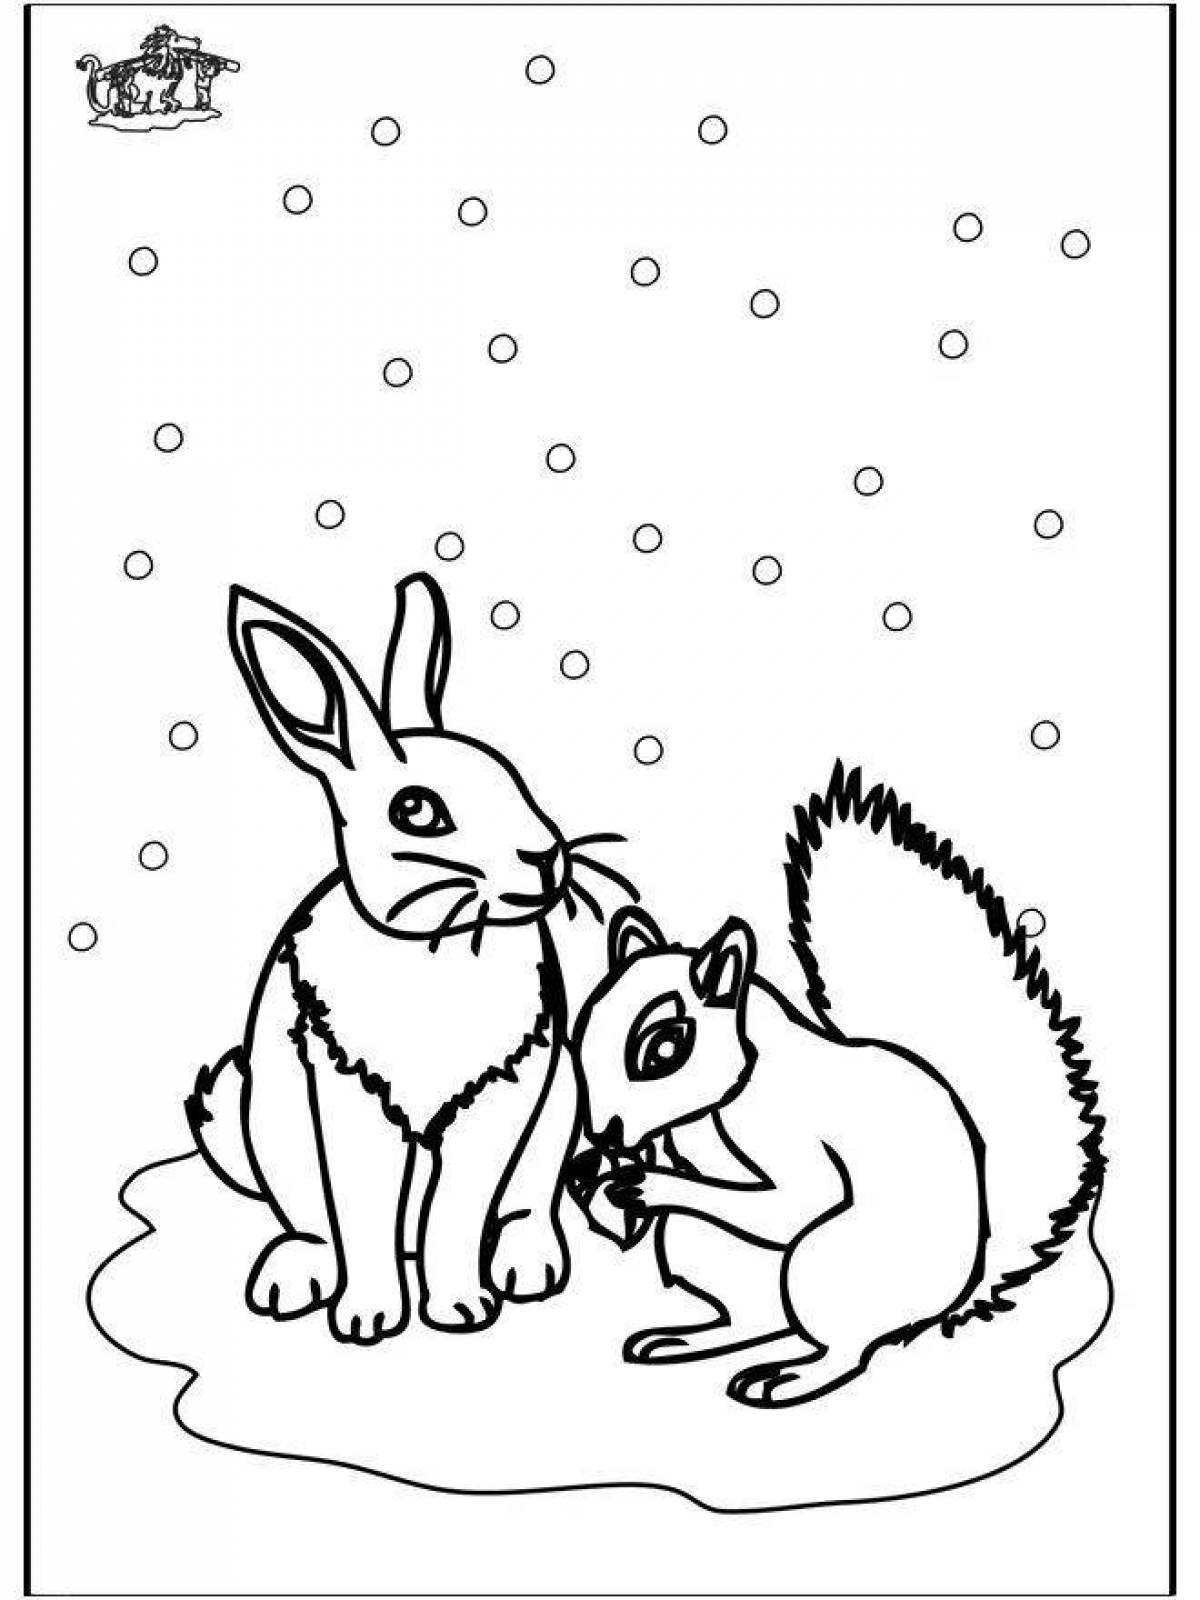 Soft hare in winter